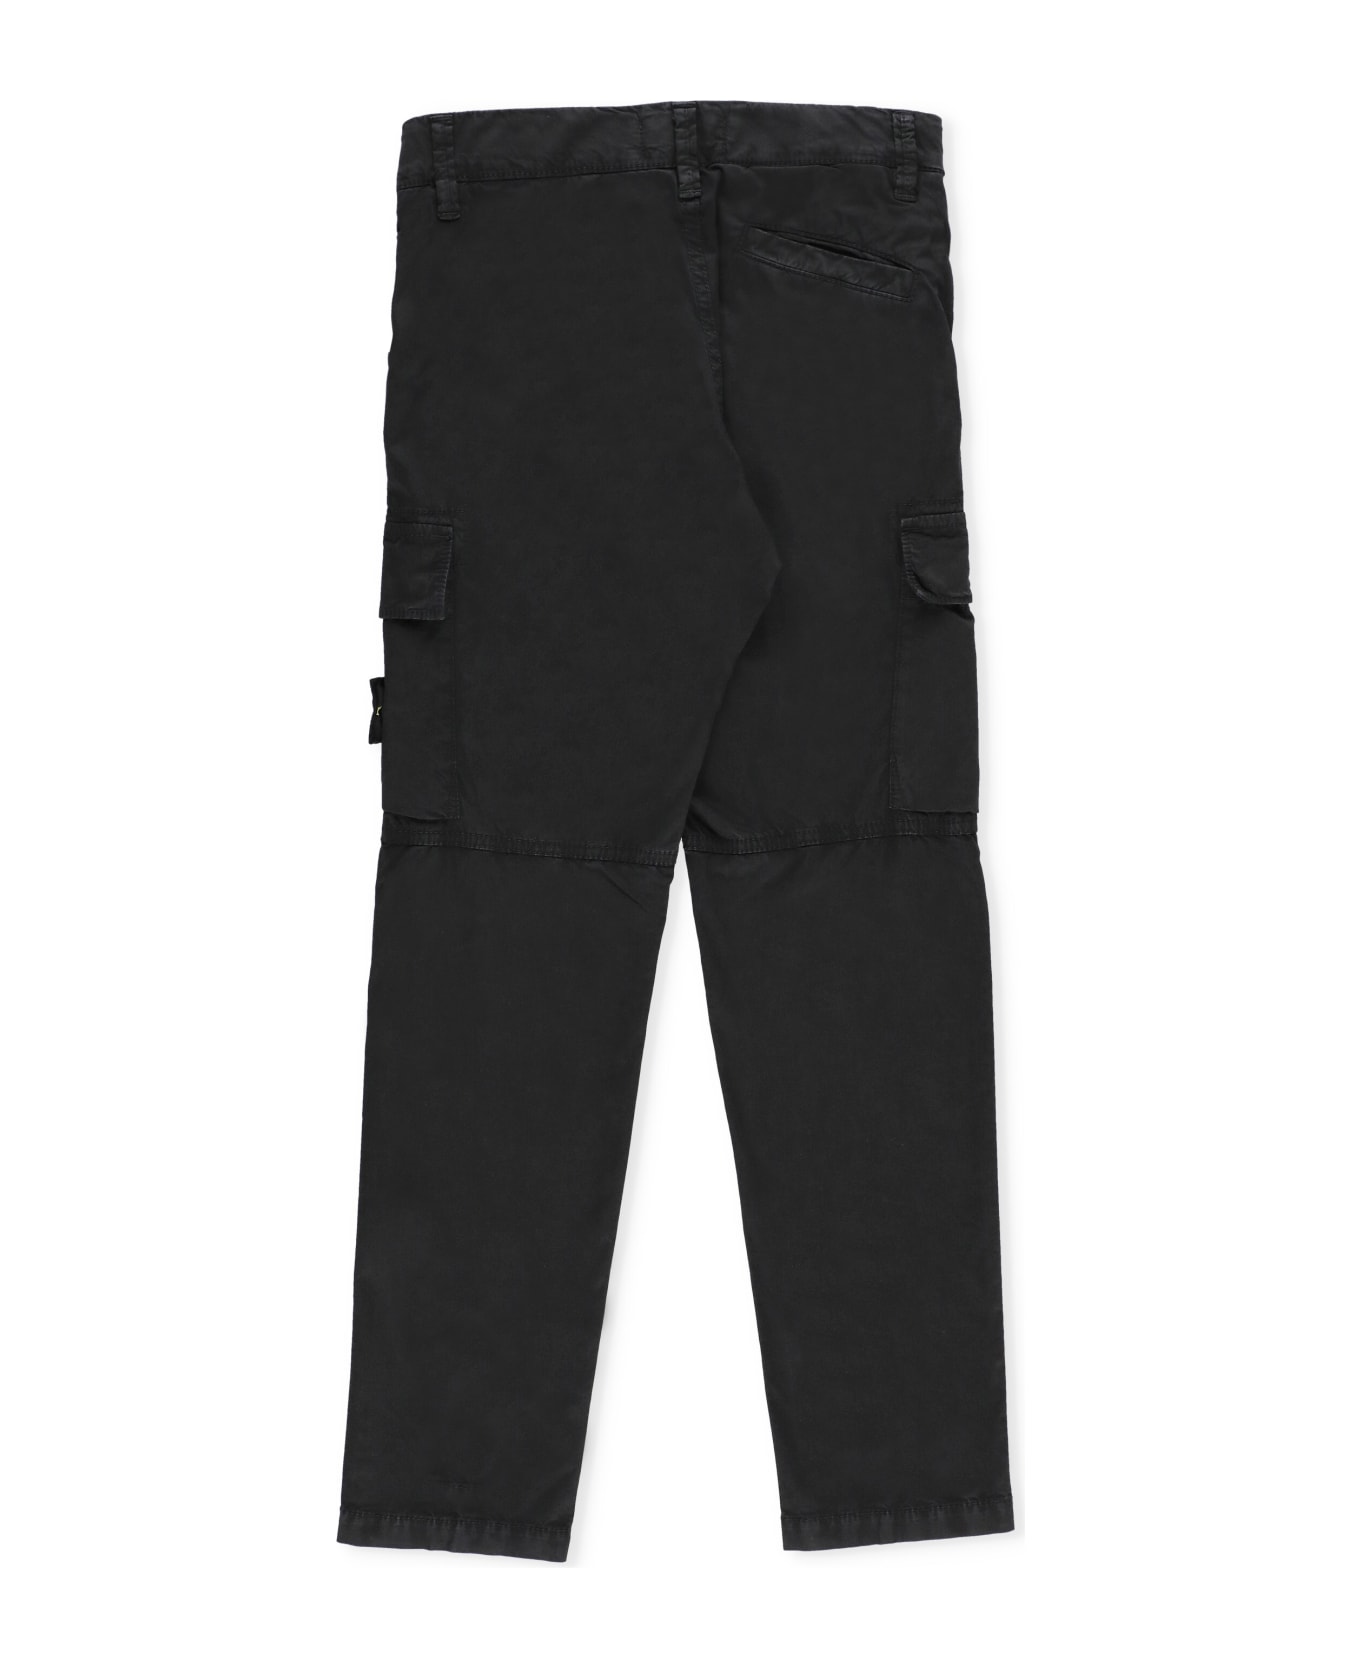 Stone Island Cotton Cargo Pants - Black